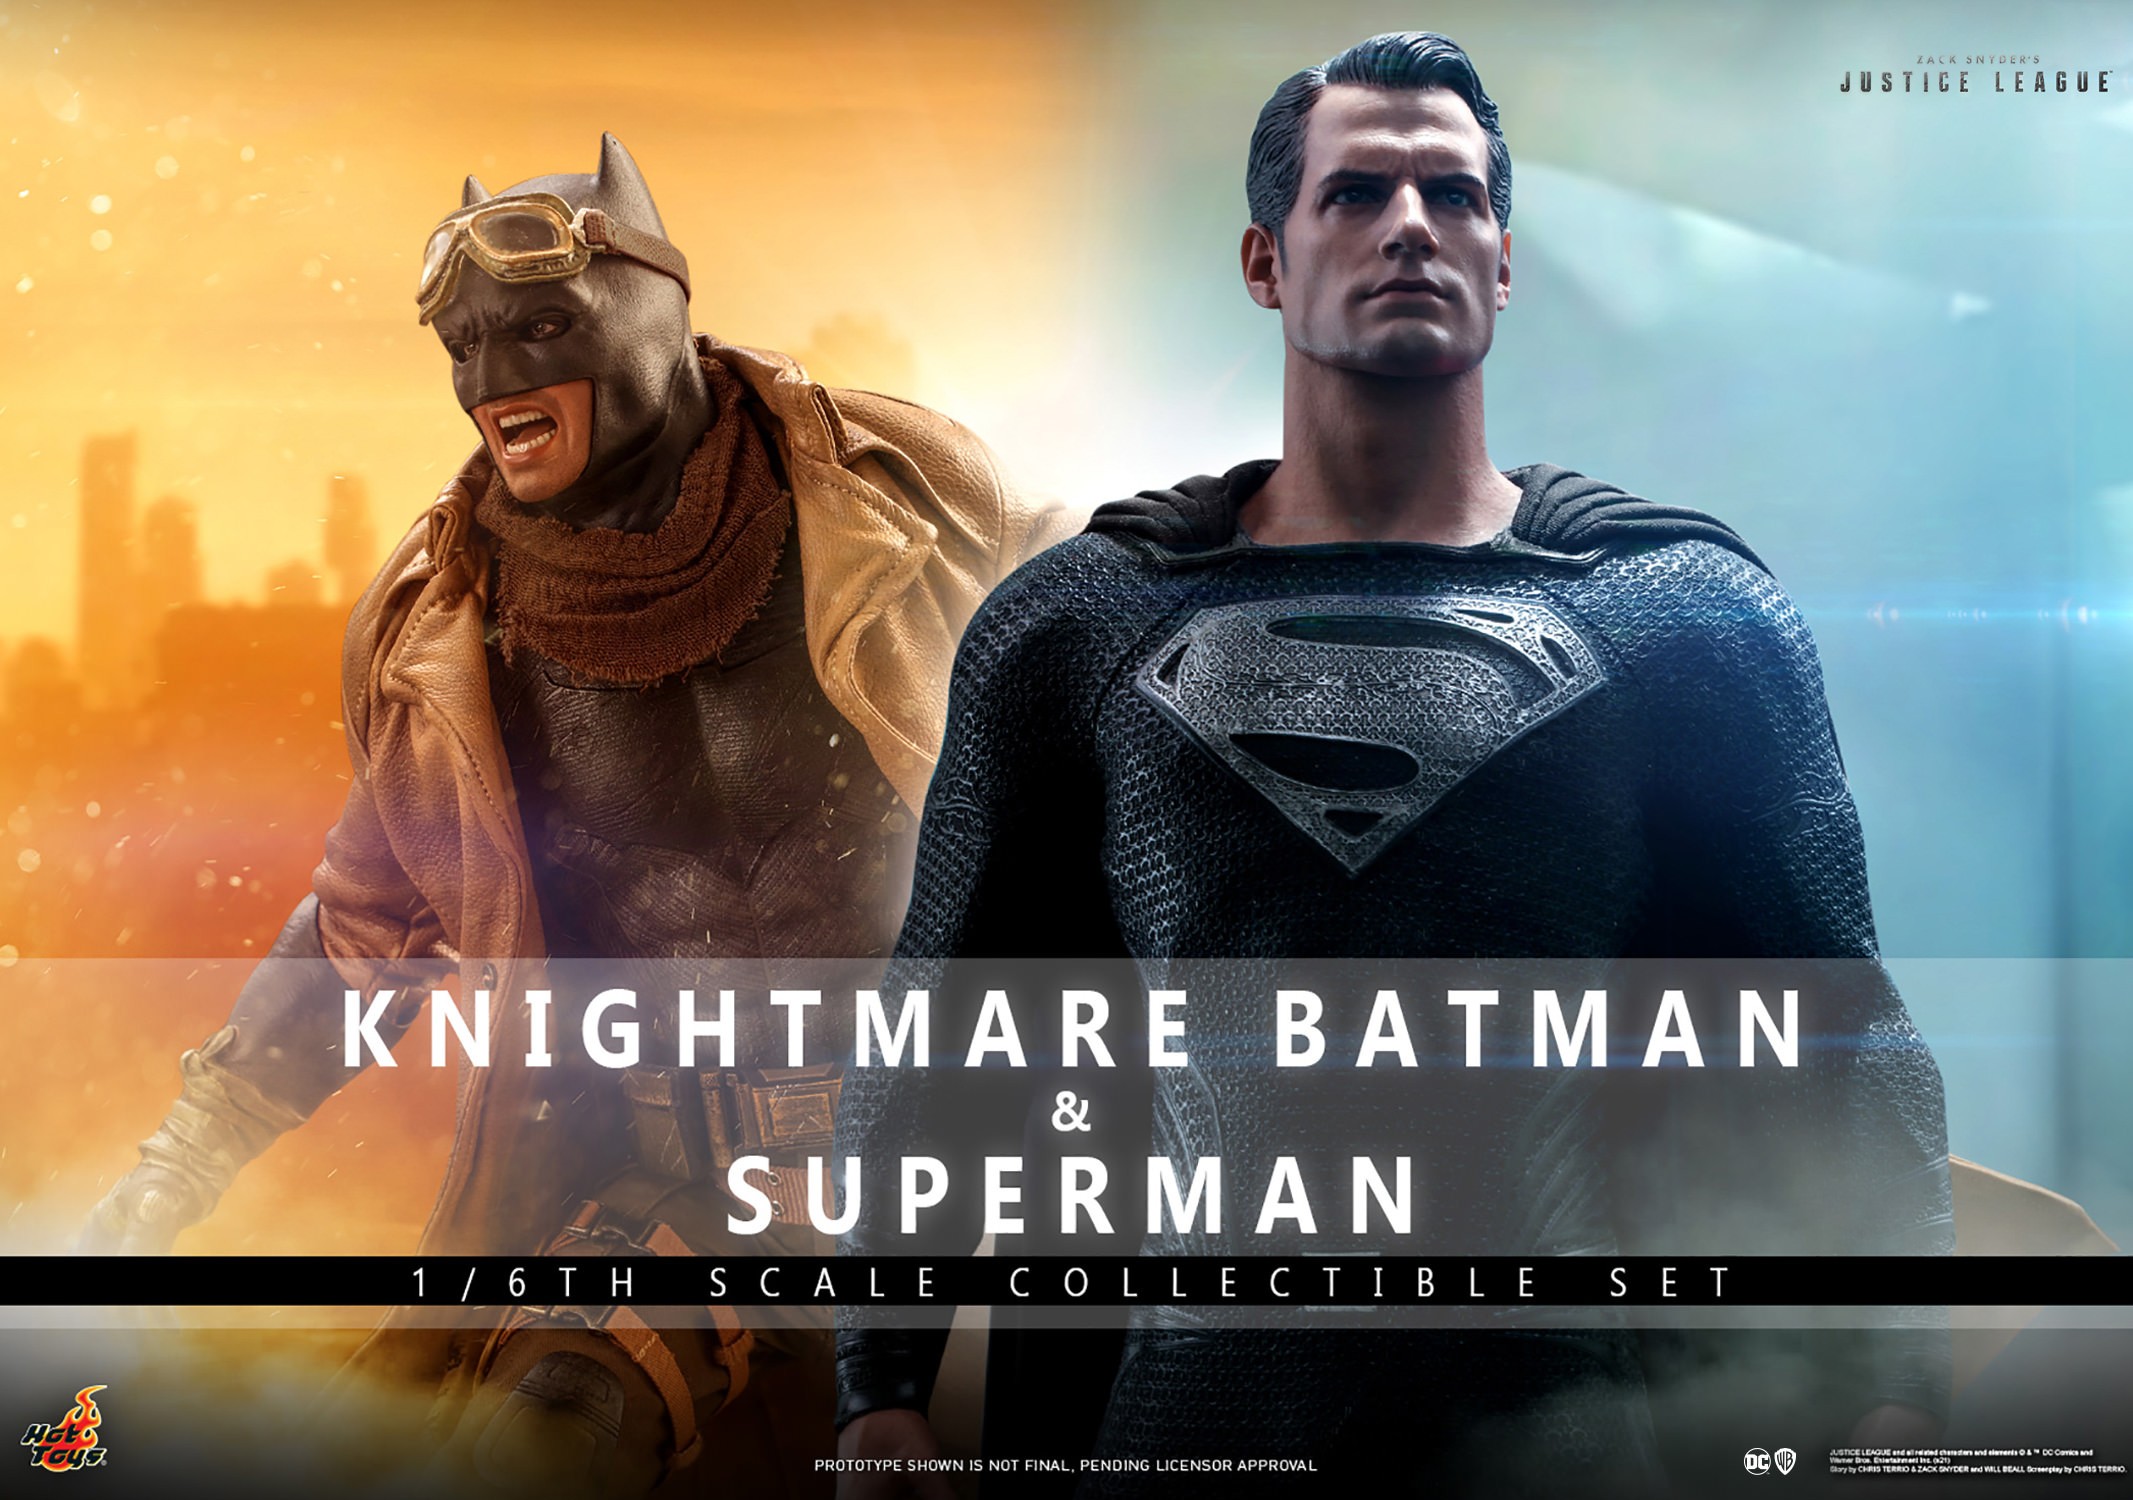 Knightmare Batman and Superman